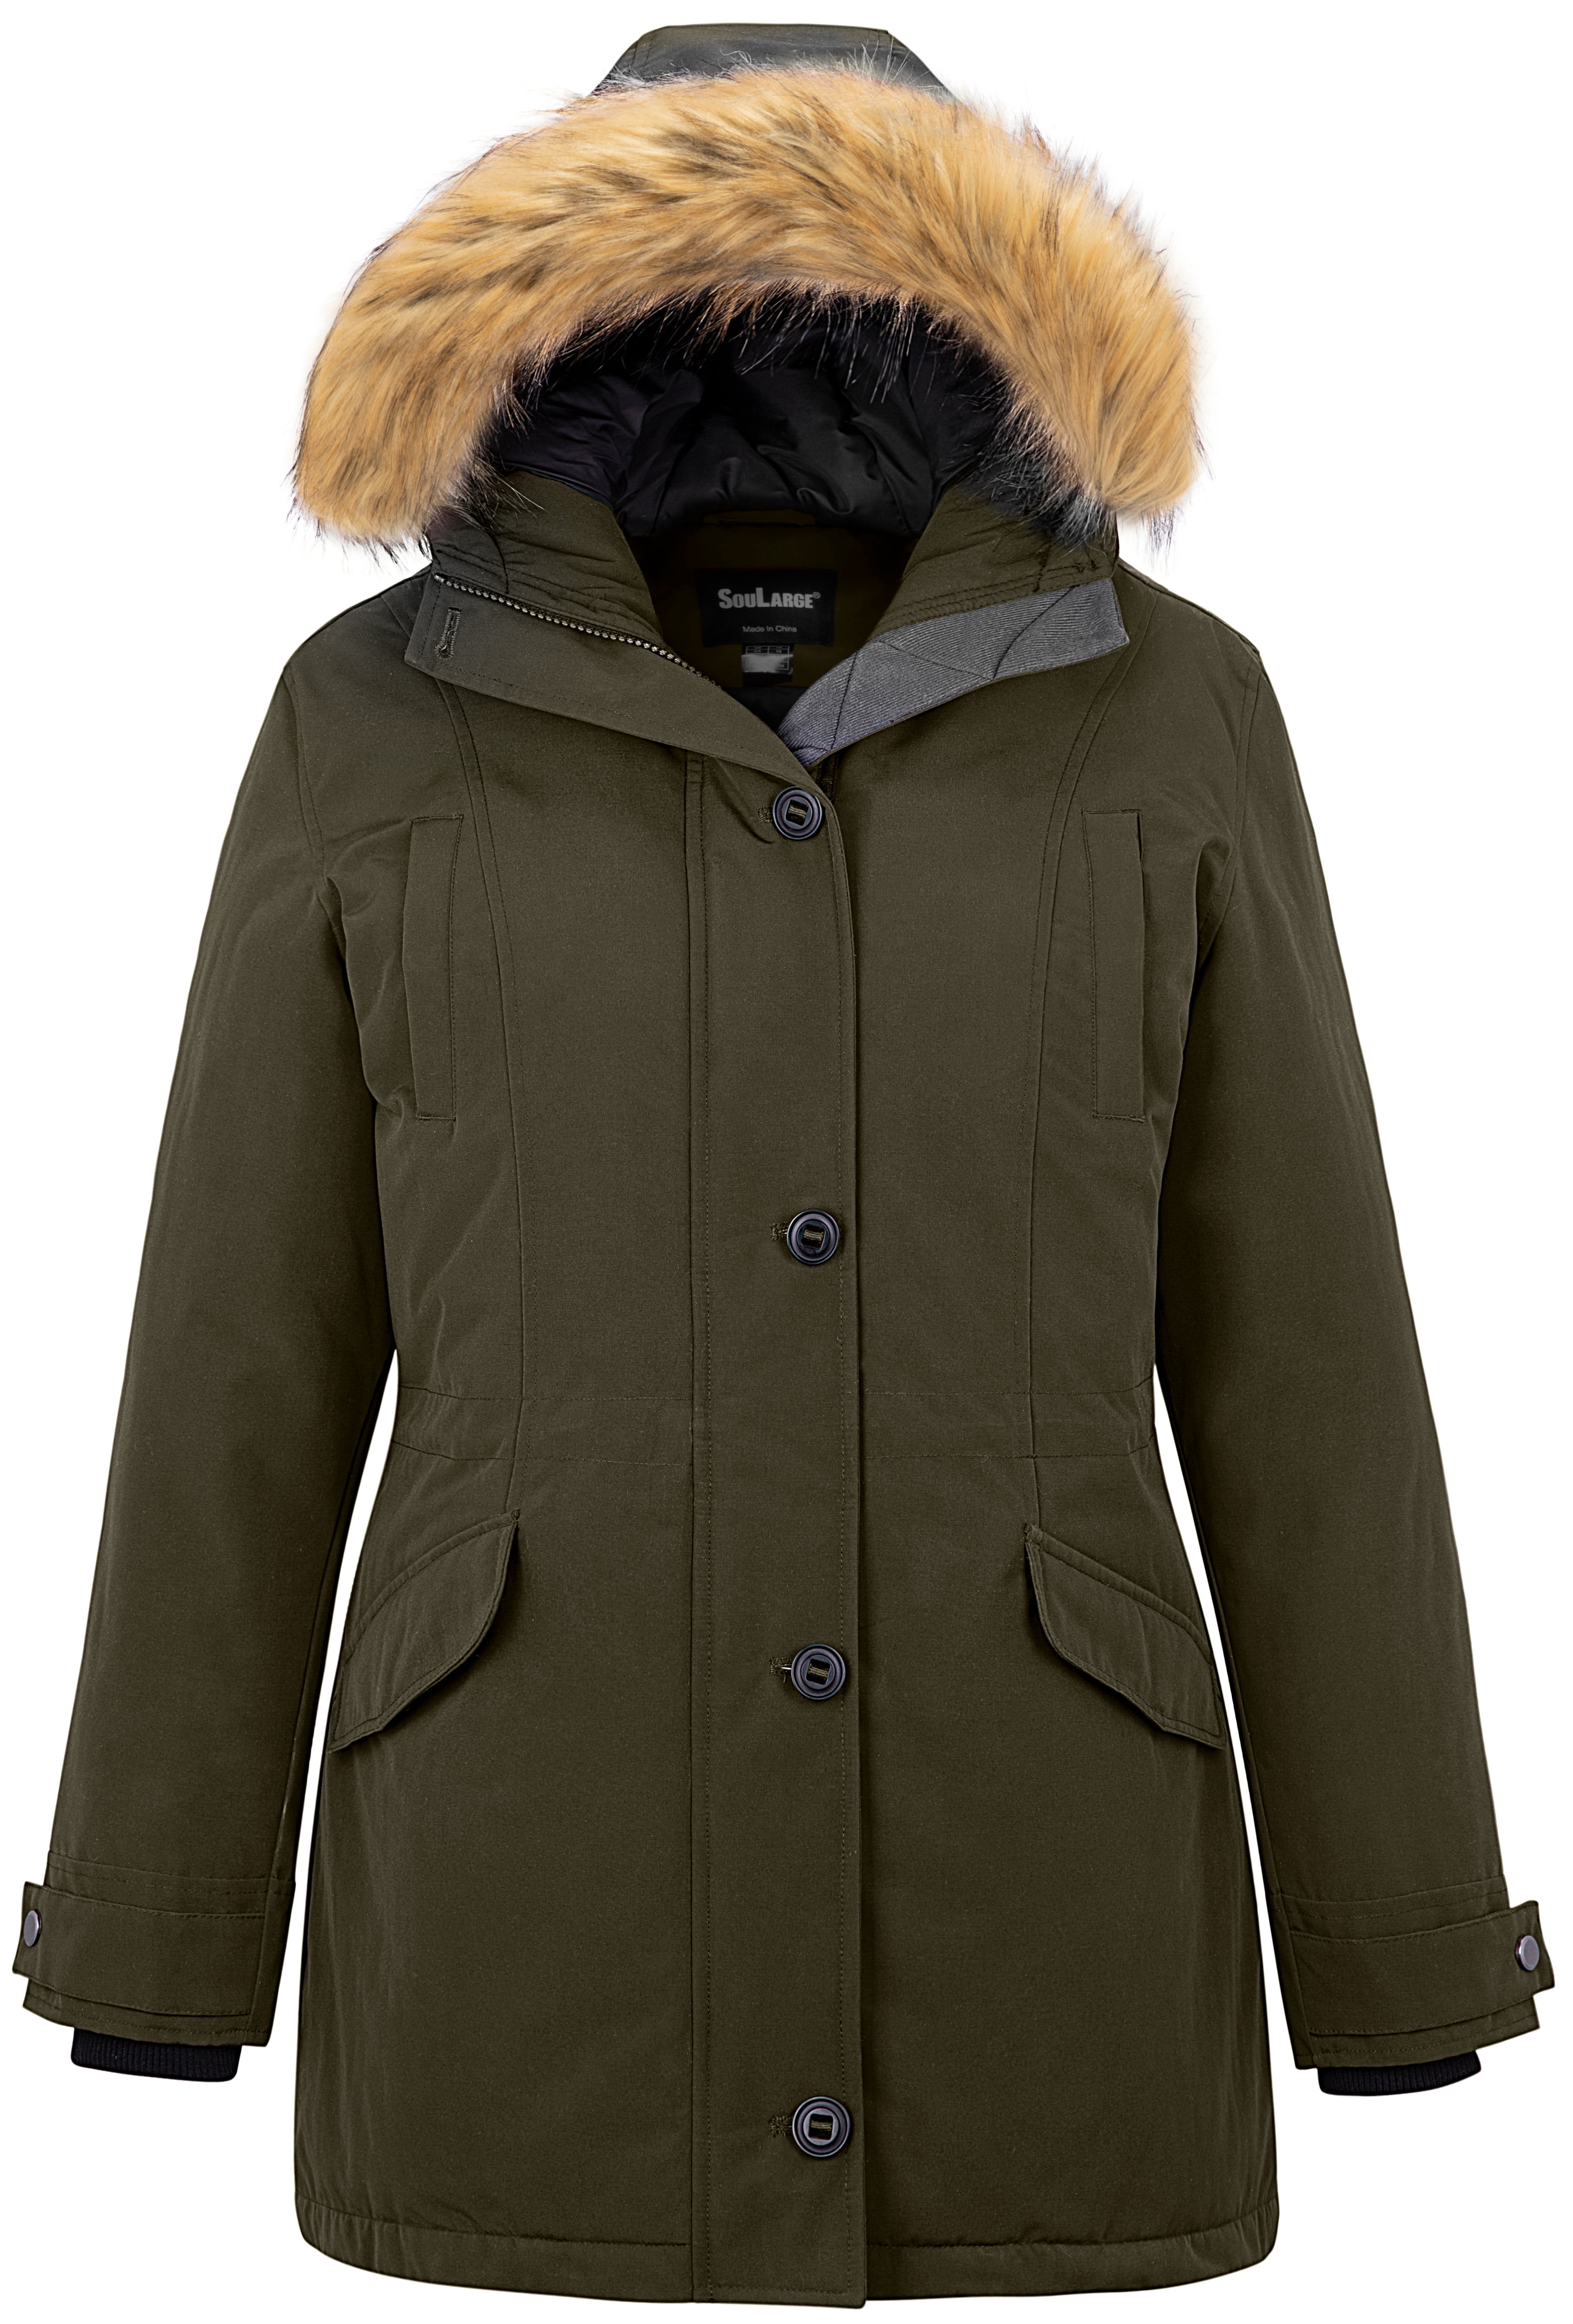 Zoek machine optimalisatie uitsterven Depressie Soularge Women's Plus Size Thermal Thickened Winter Parka Jacket Puffer  coat (Army green, 3X) - Walmart.com